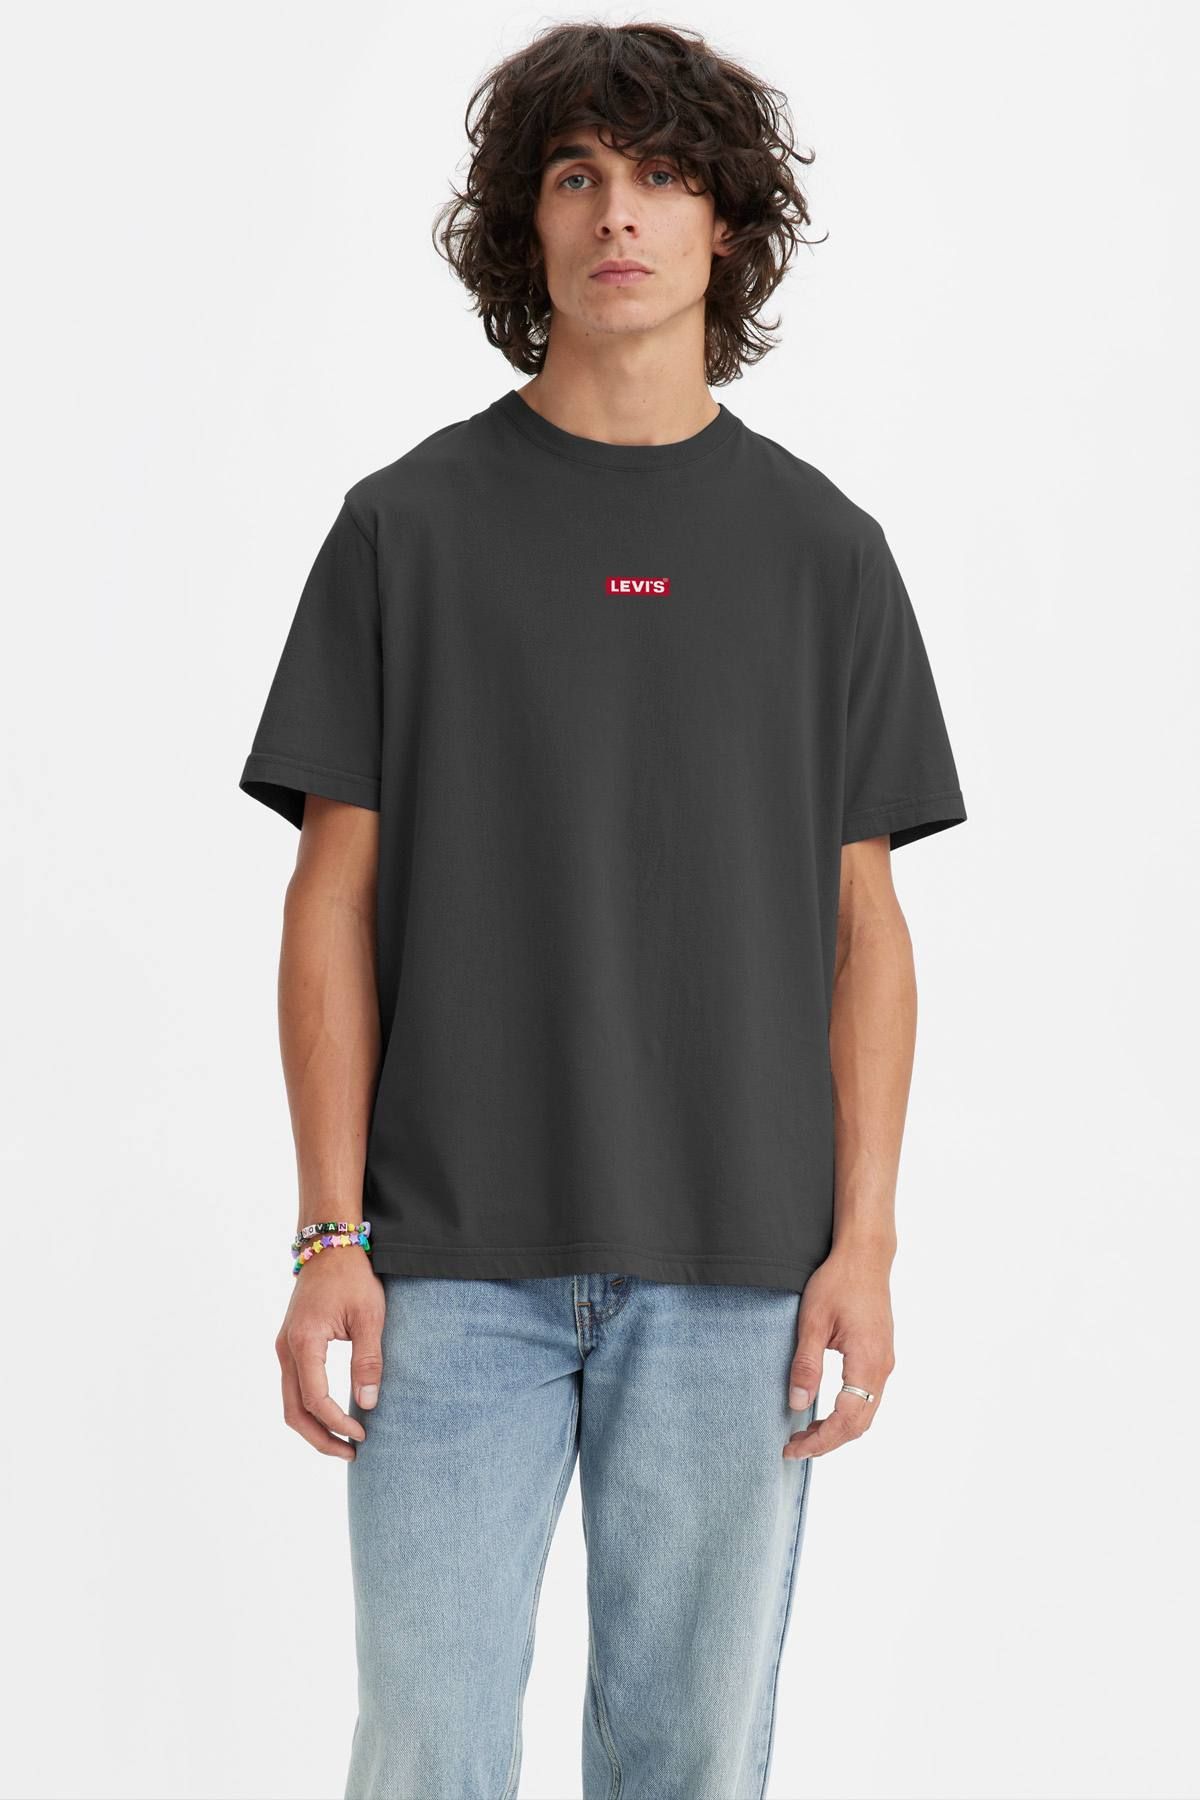 Levi's® Men's Relaxed Baby Tab Short Sleeve T-Shirt Black Men T-Shirts